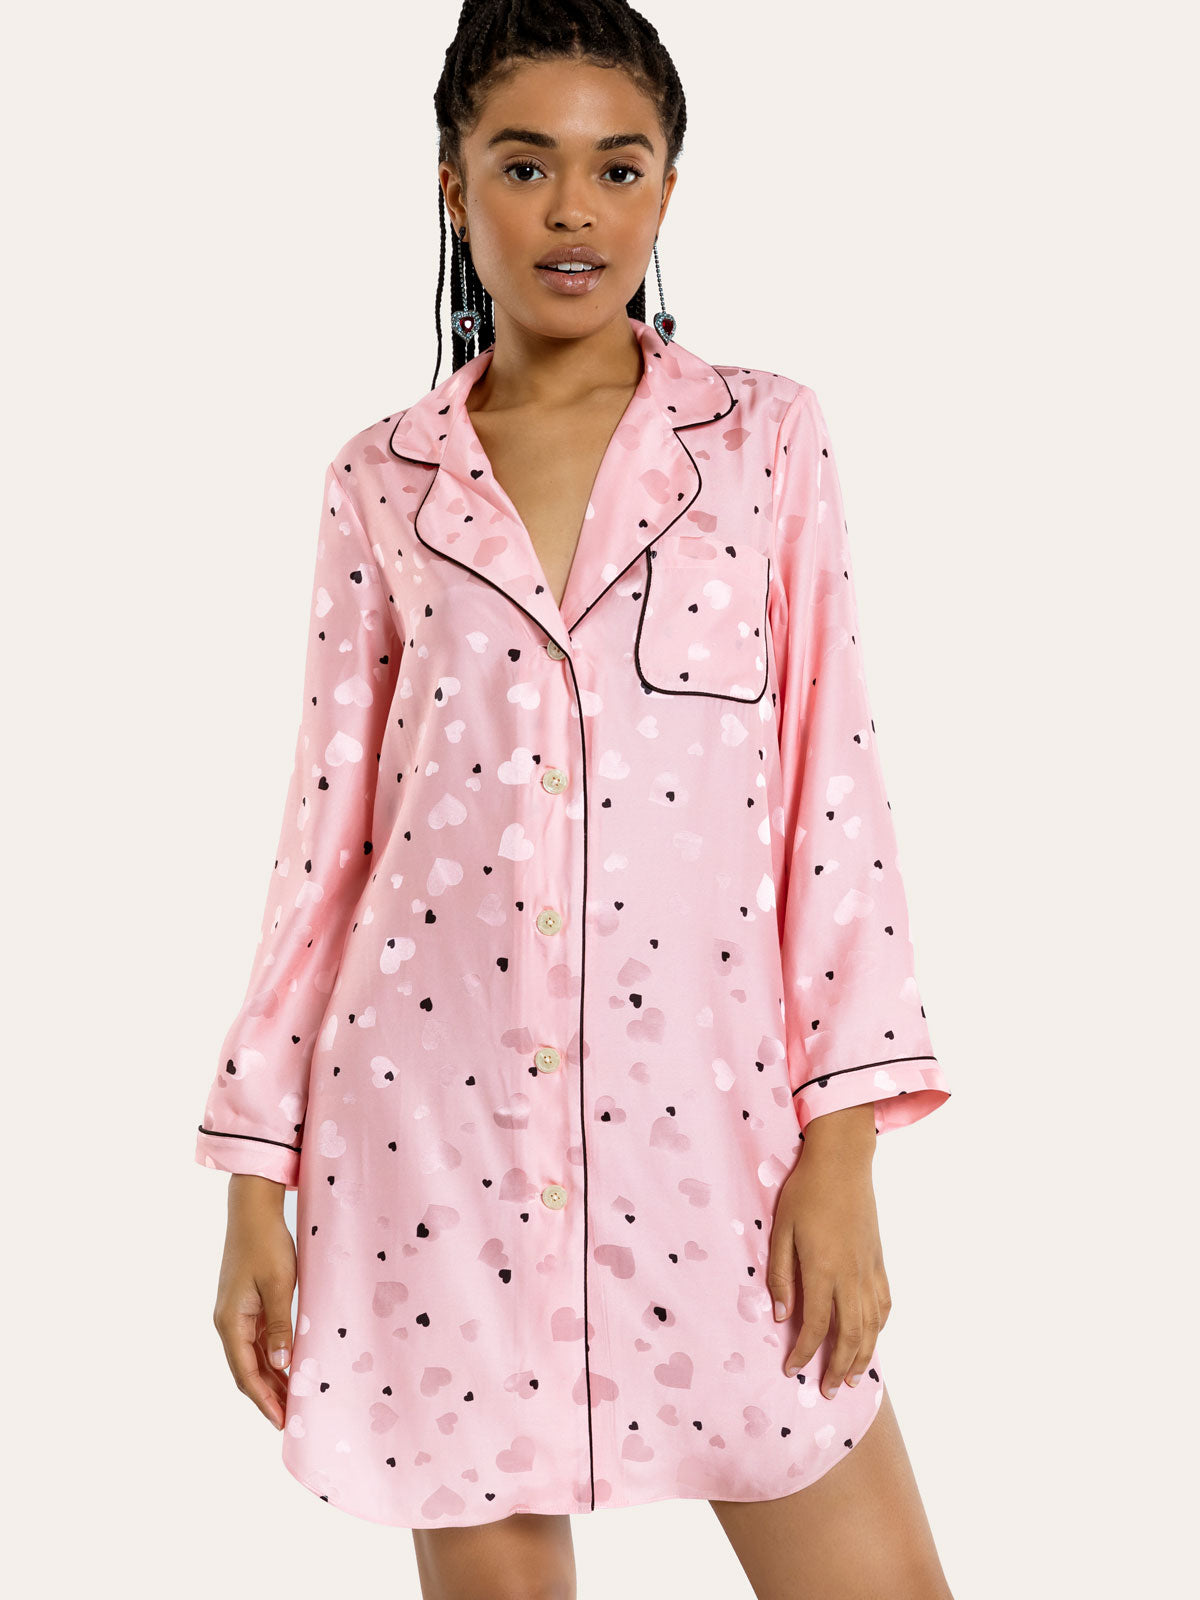 Jillian Night Shirt in Pretty in Pink By Morgan Lane